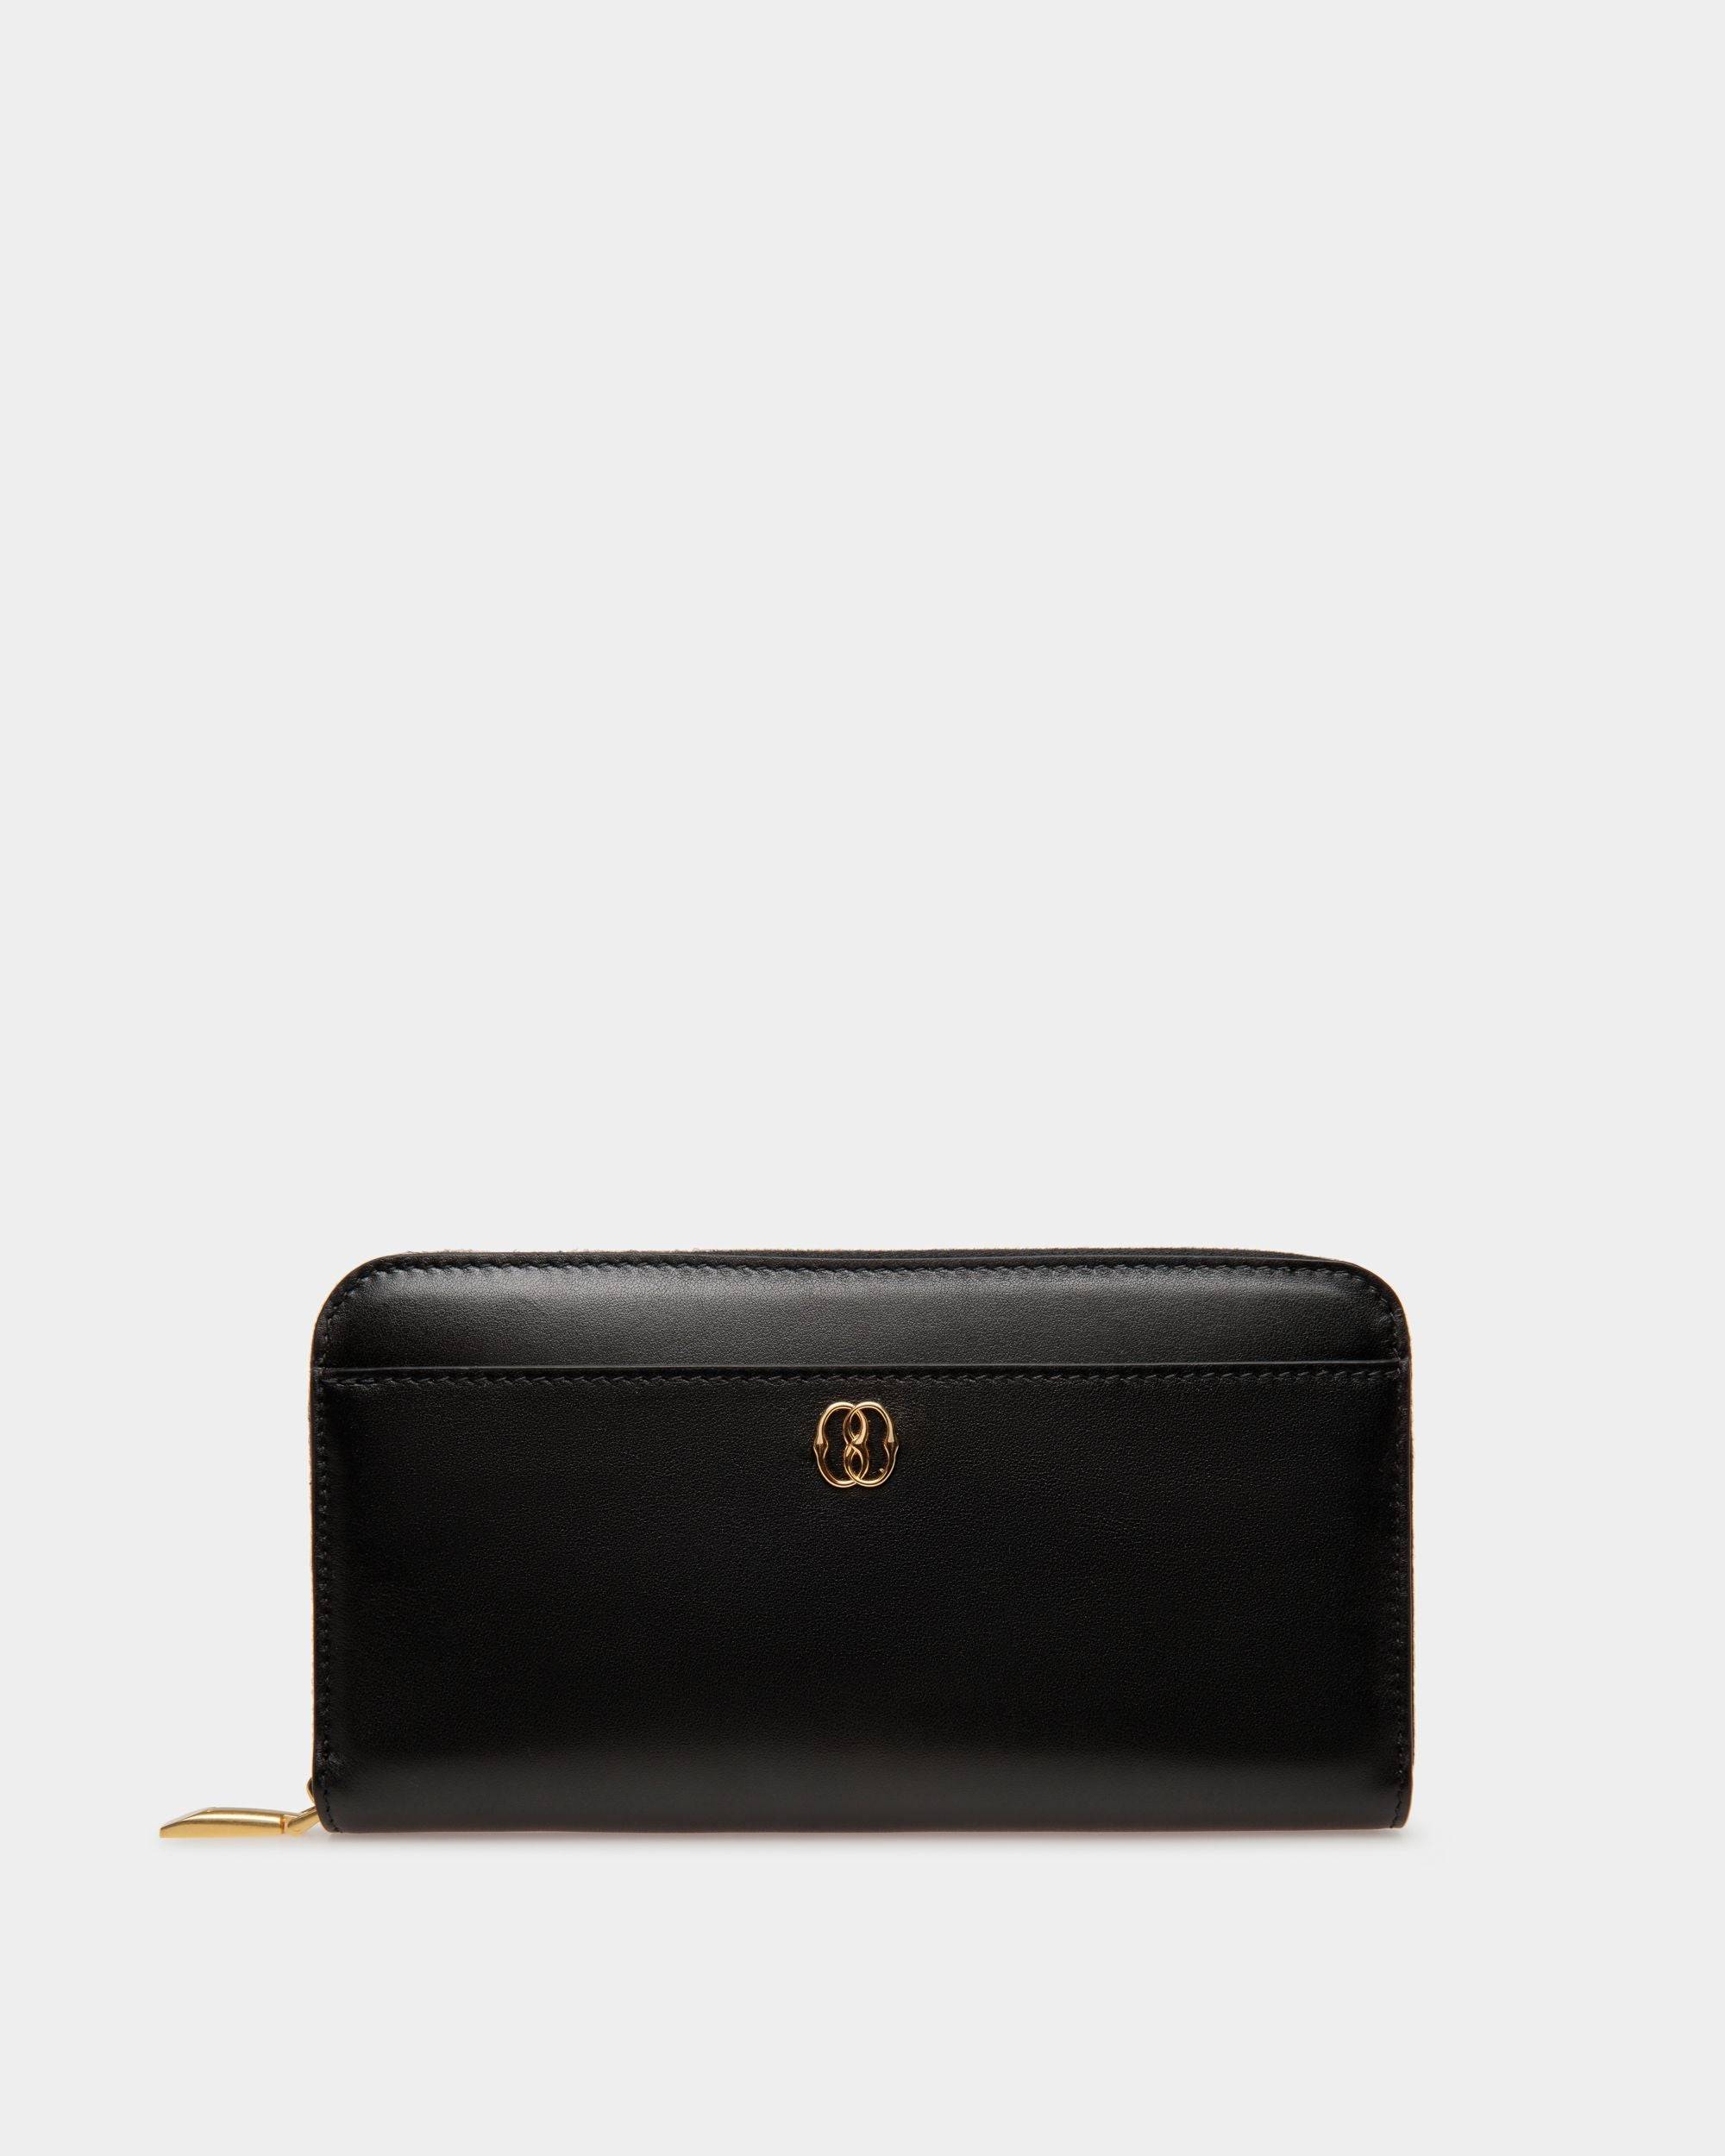 Emblem | Women's Long Wallet in Black Leather | Bally | Still Life Front